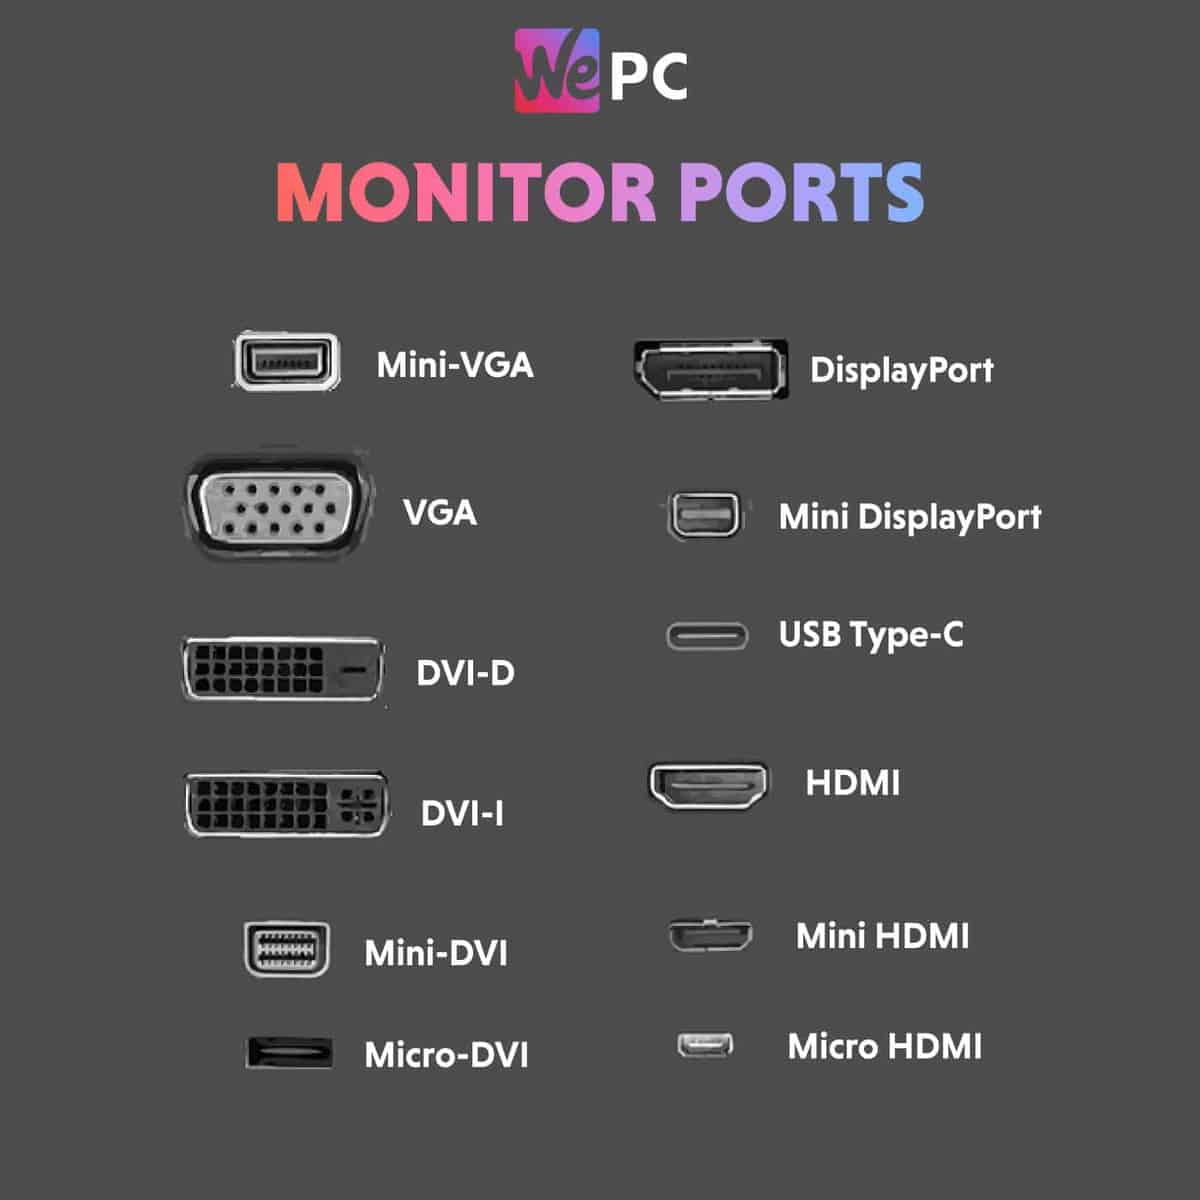 Why monitors have USB ports?